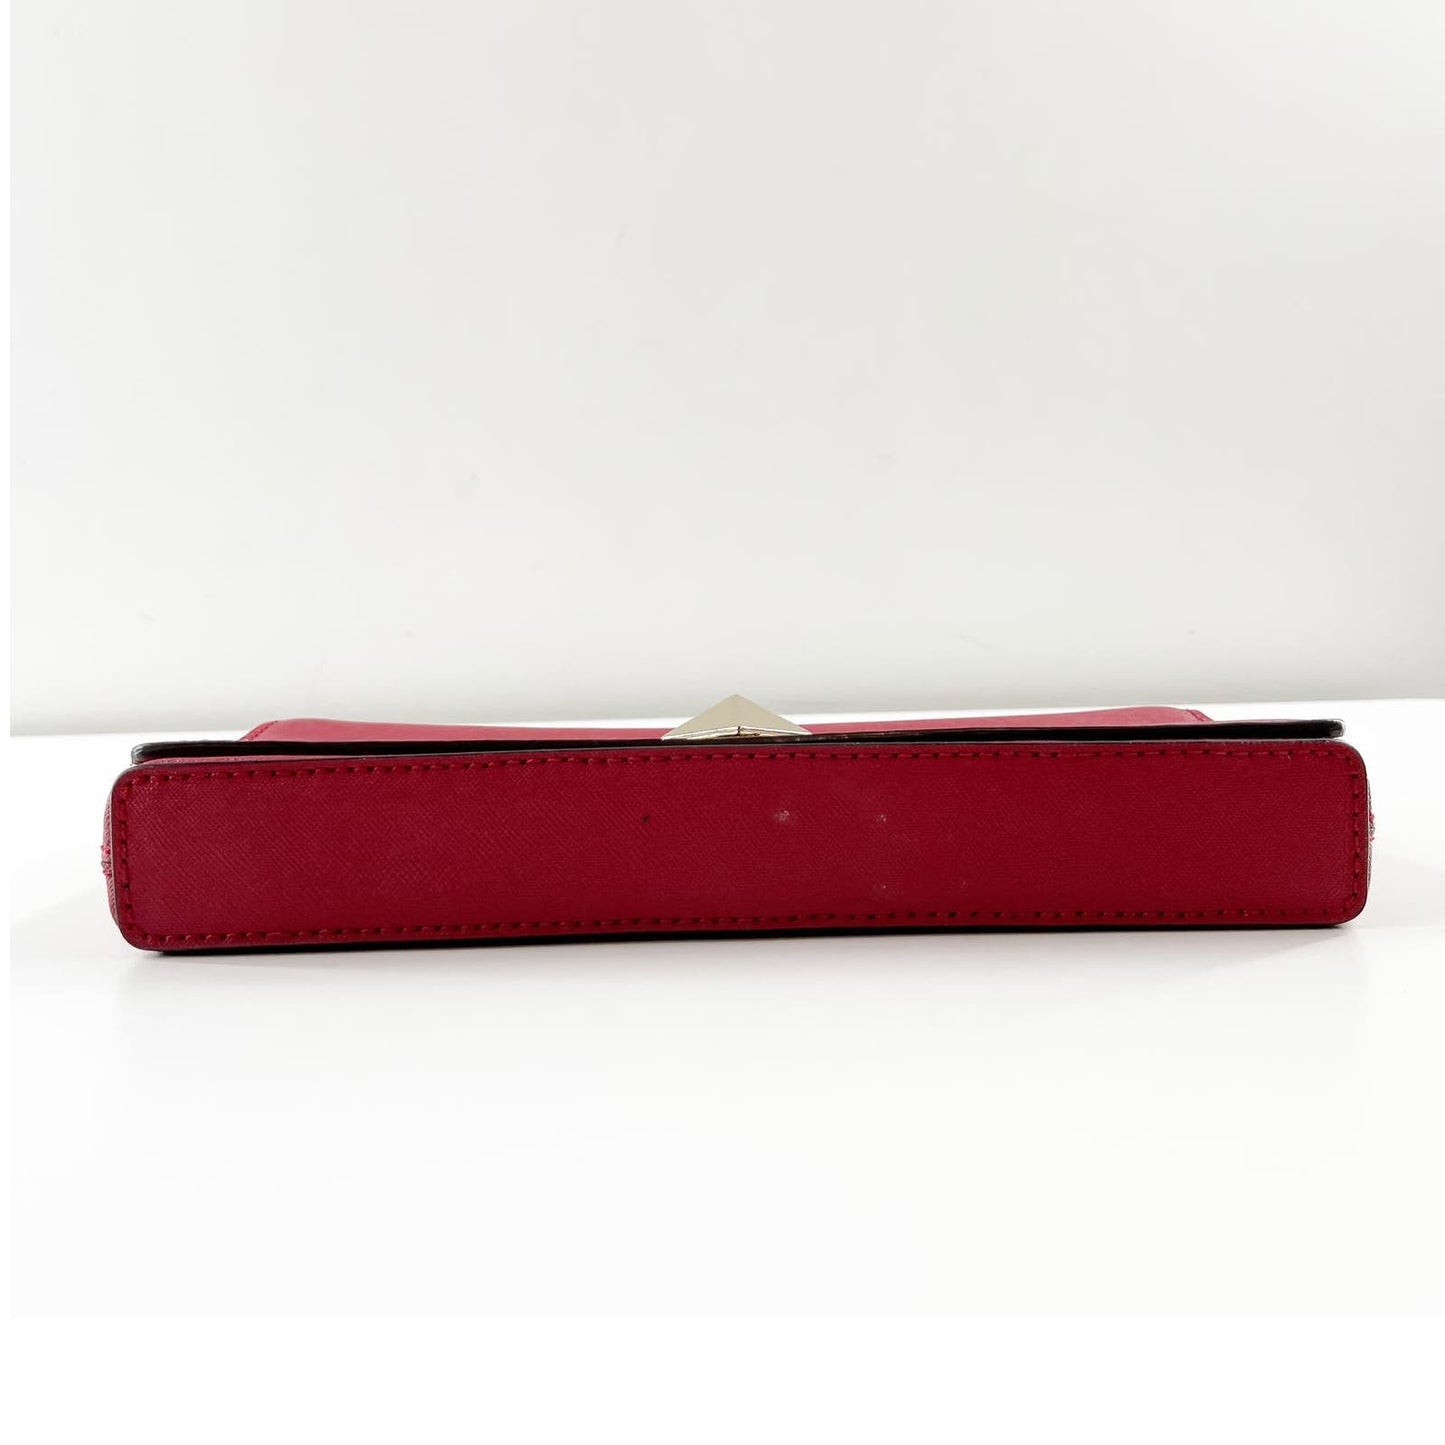 Kate Spade Lock Turn Leather Clutch Bag Wallet Red